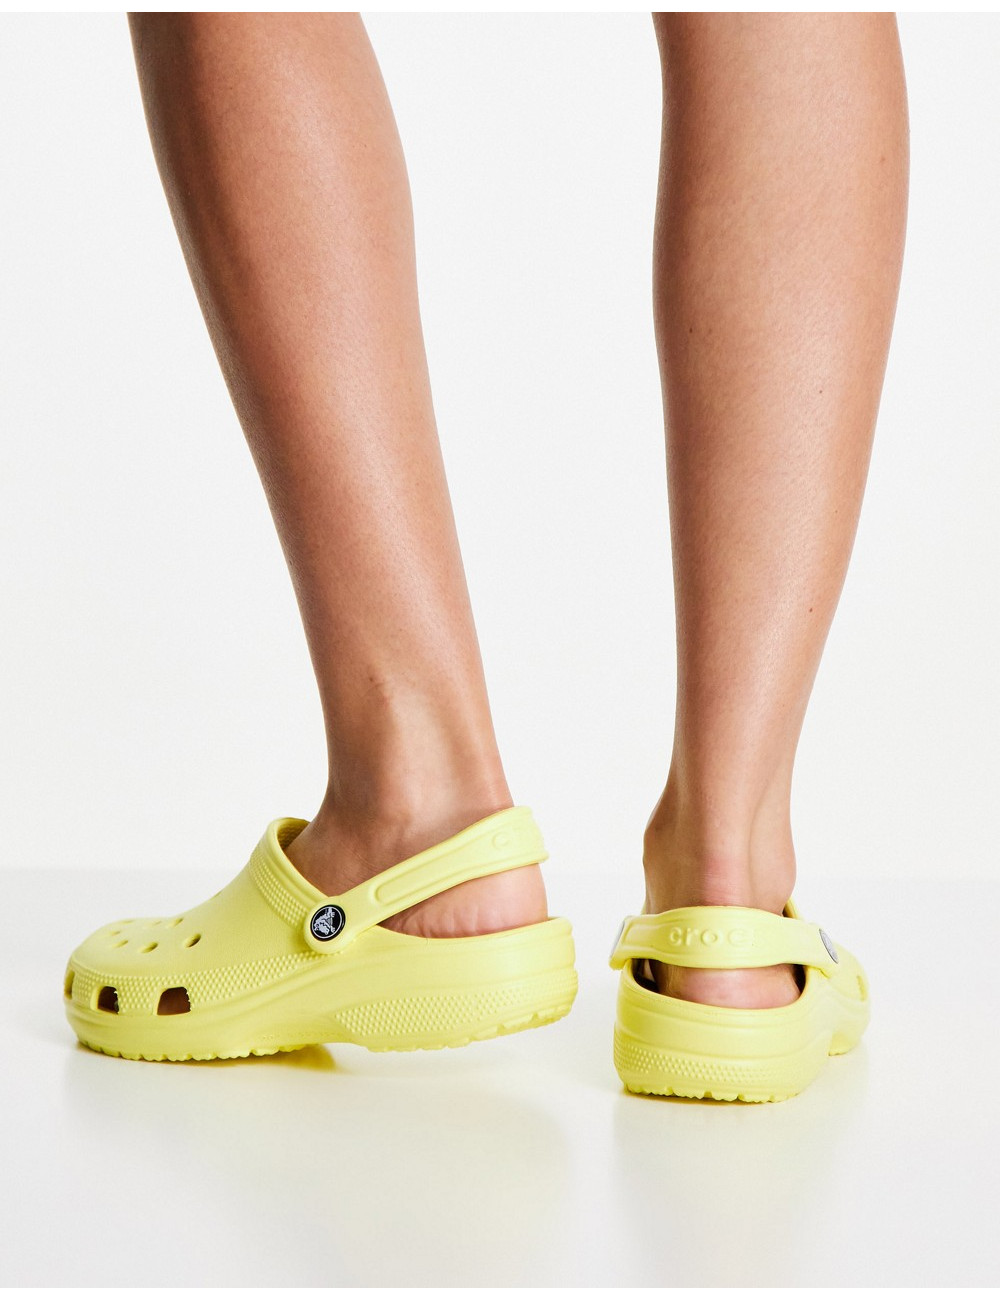 Crocs classic shoes in banana